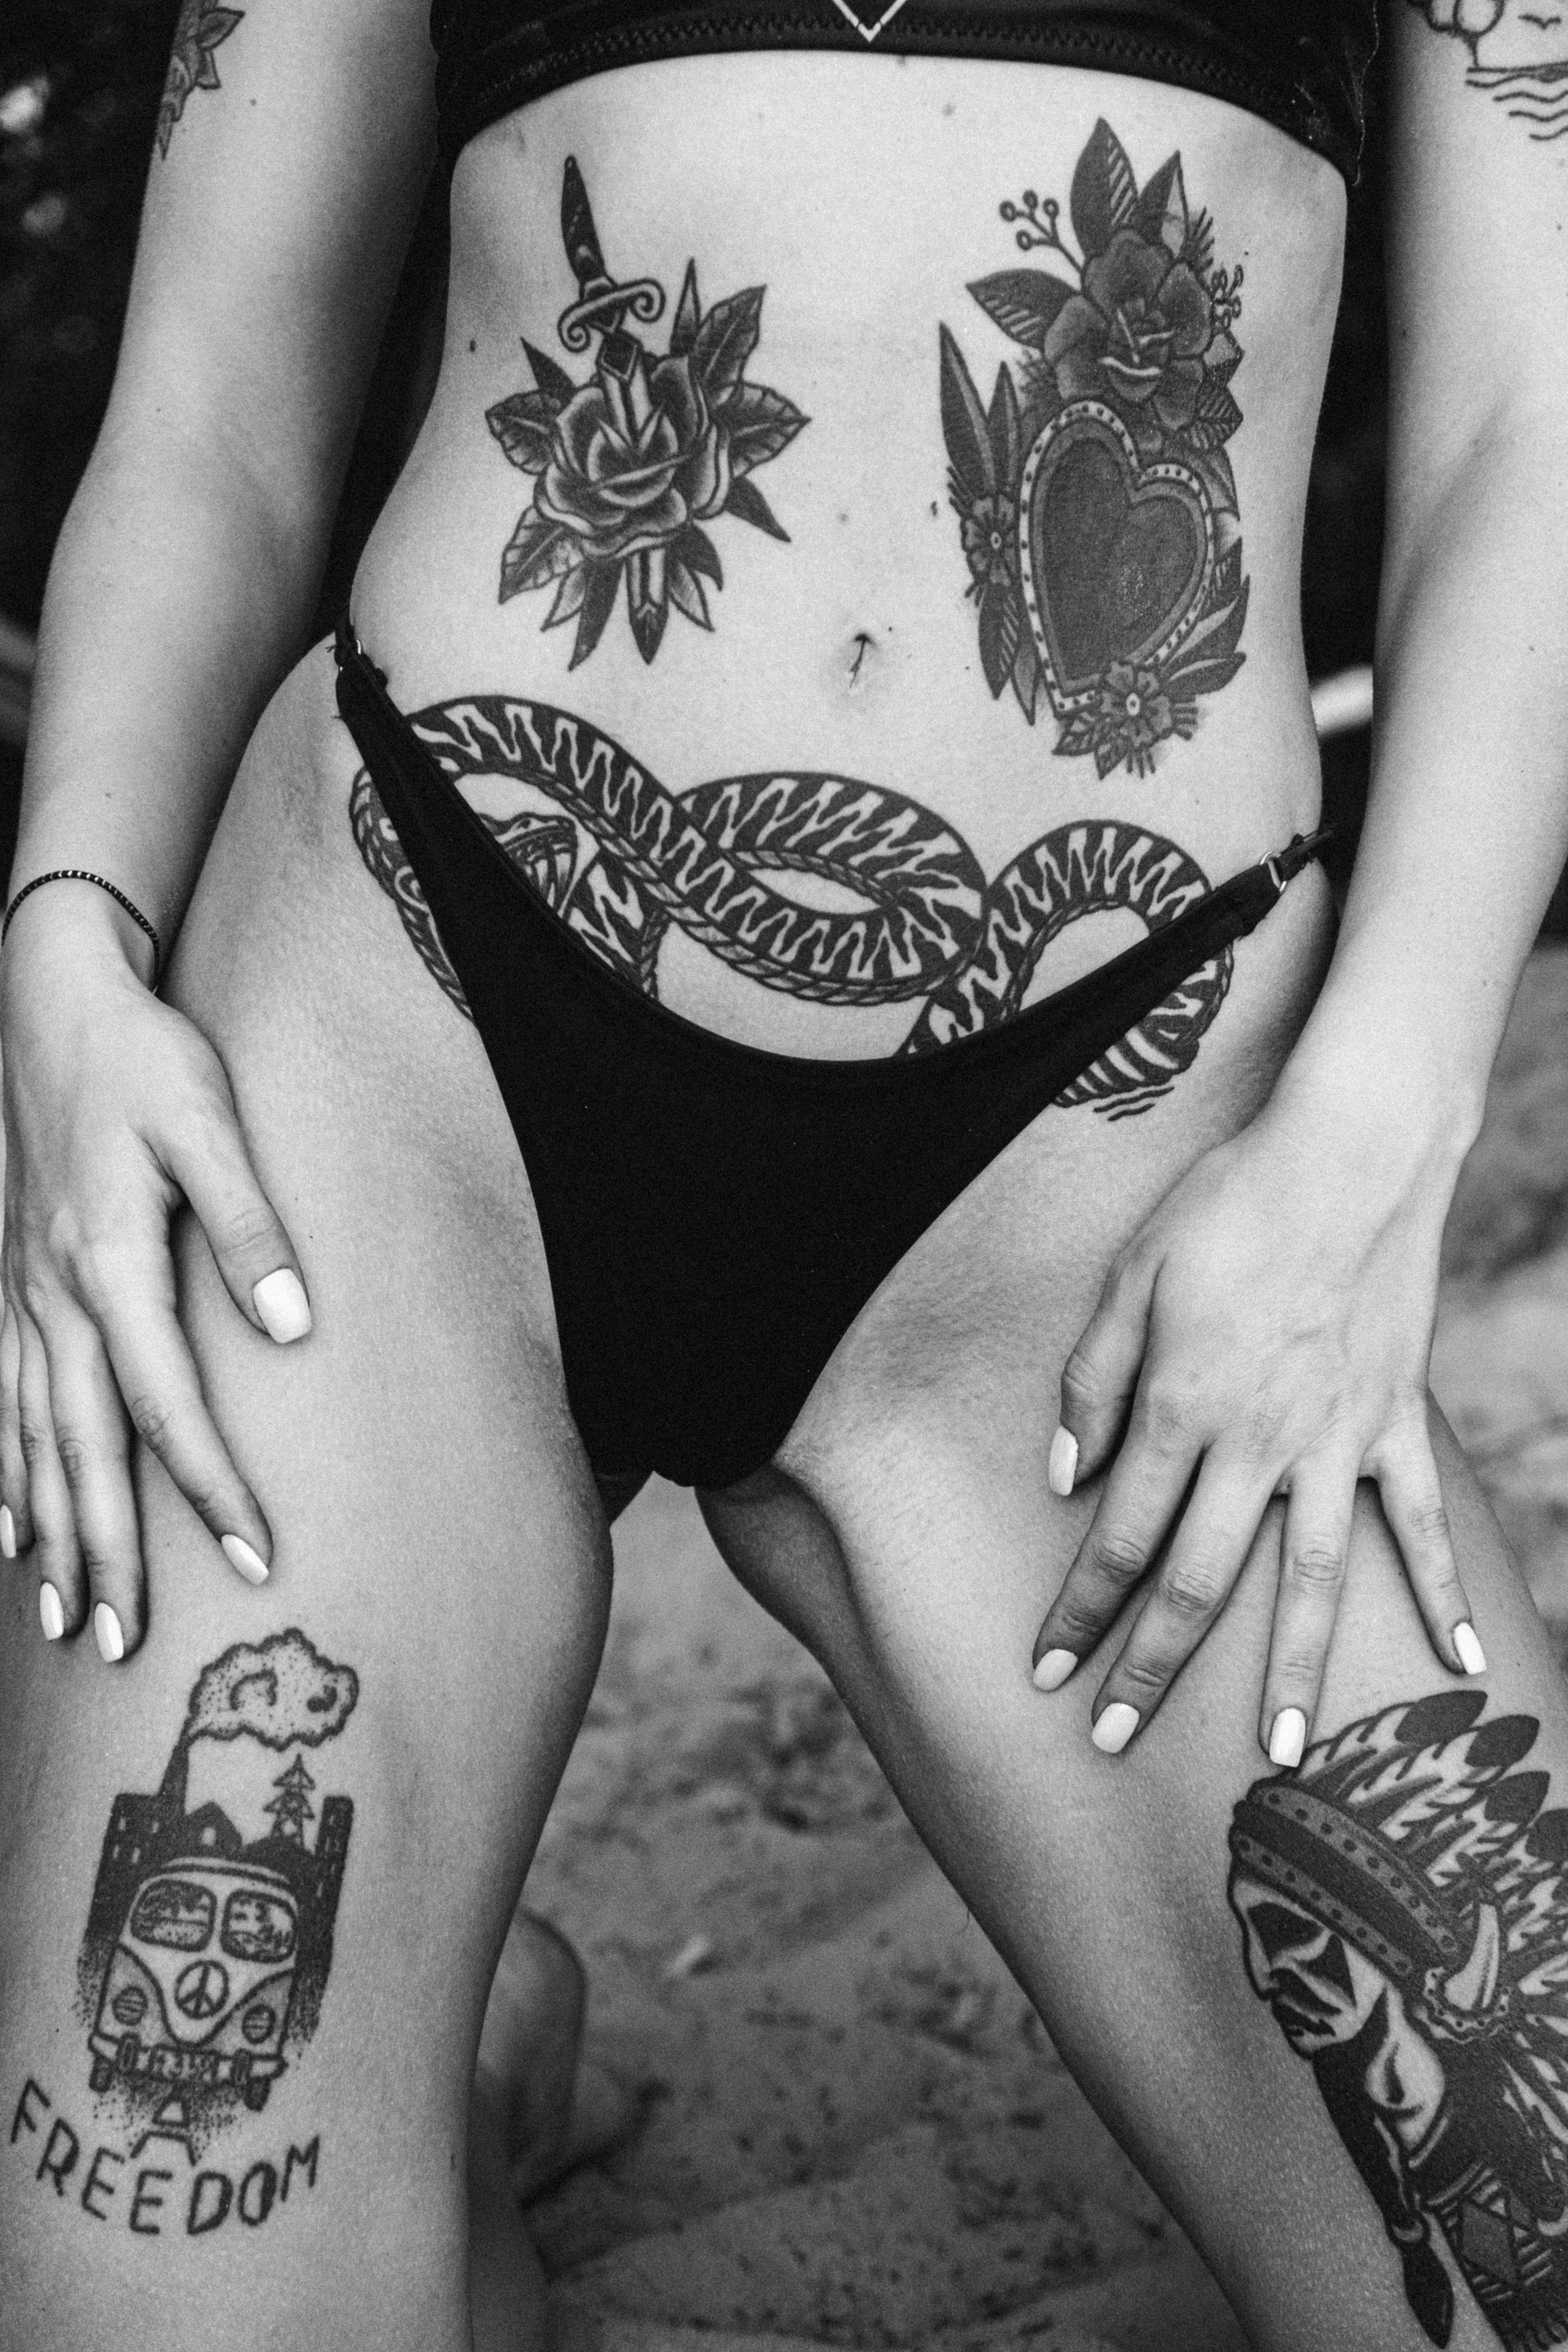 A woman revealing her tattoos | Source: Unsplash